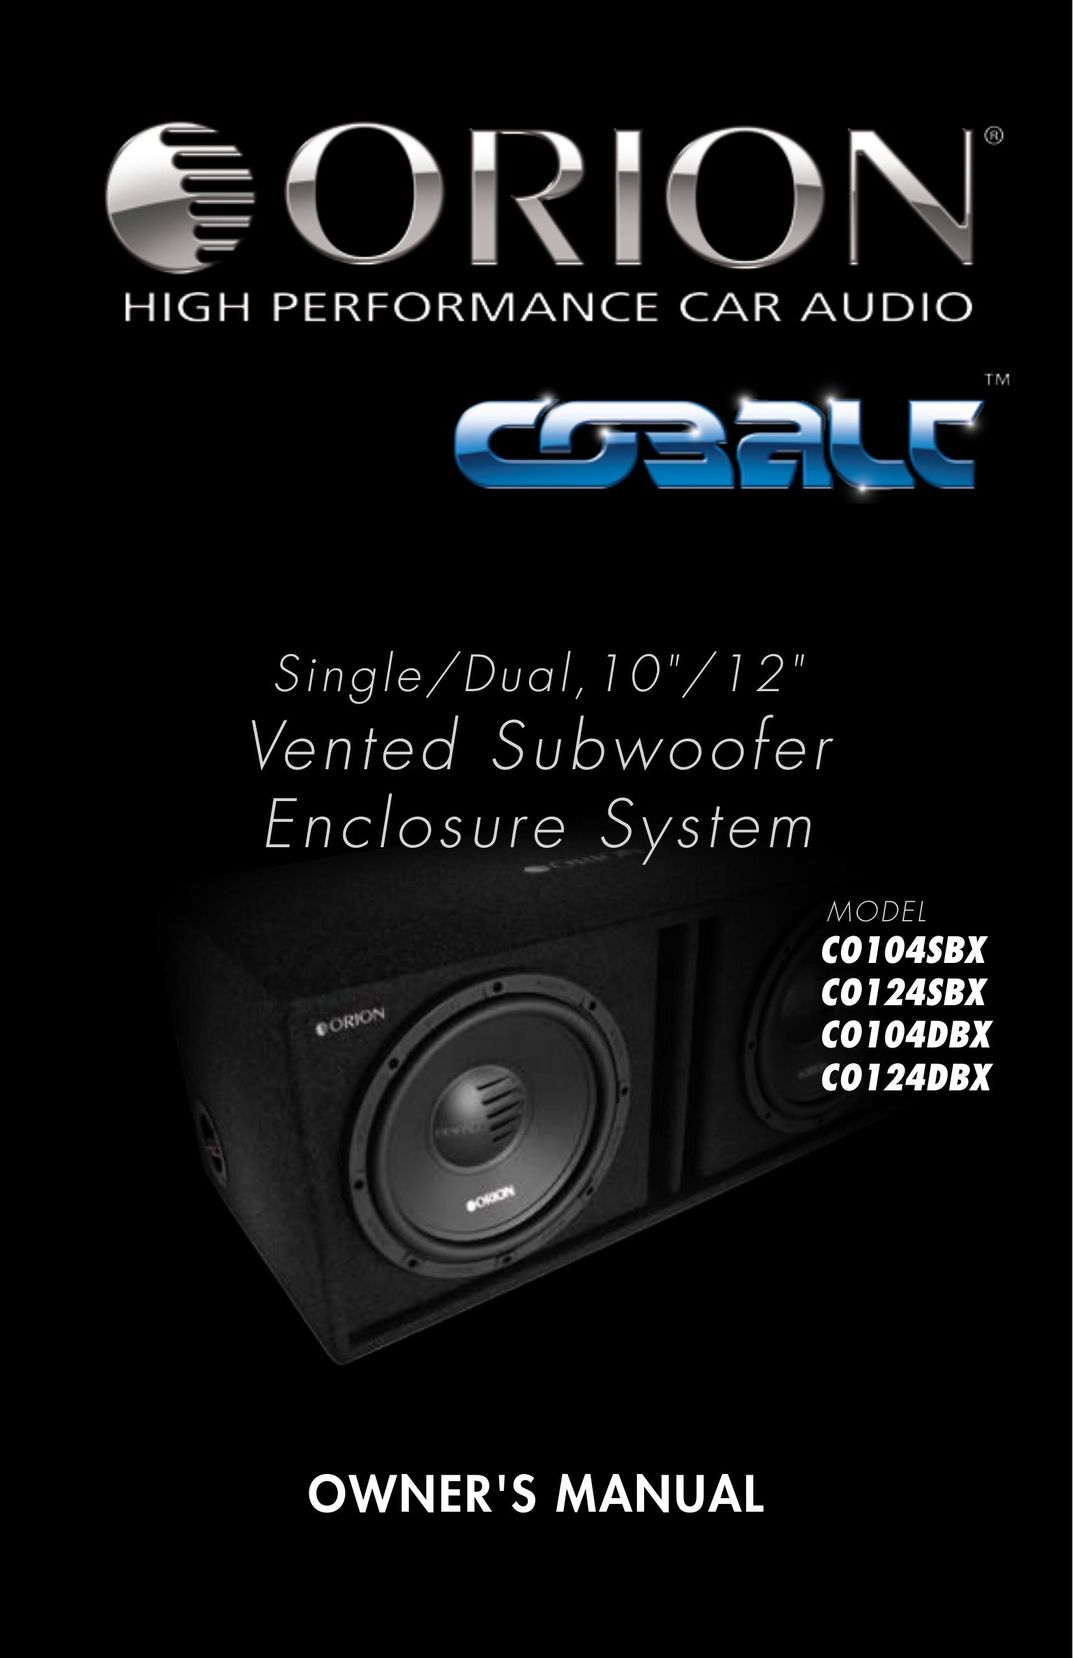 Orion Car Audio CO124SBX Speaker User Manual